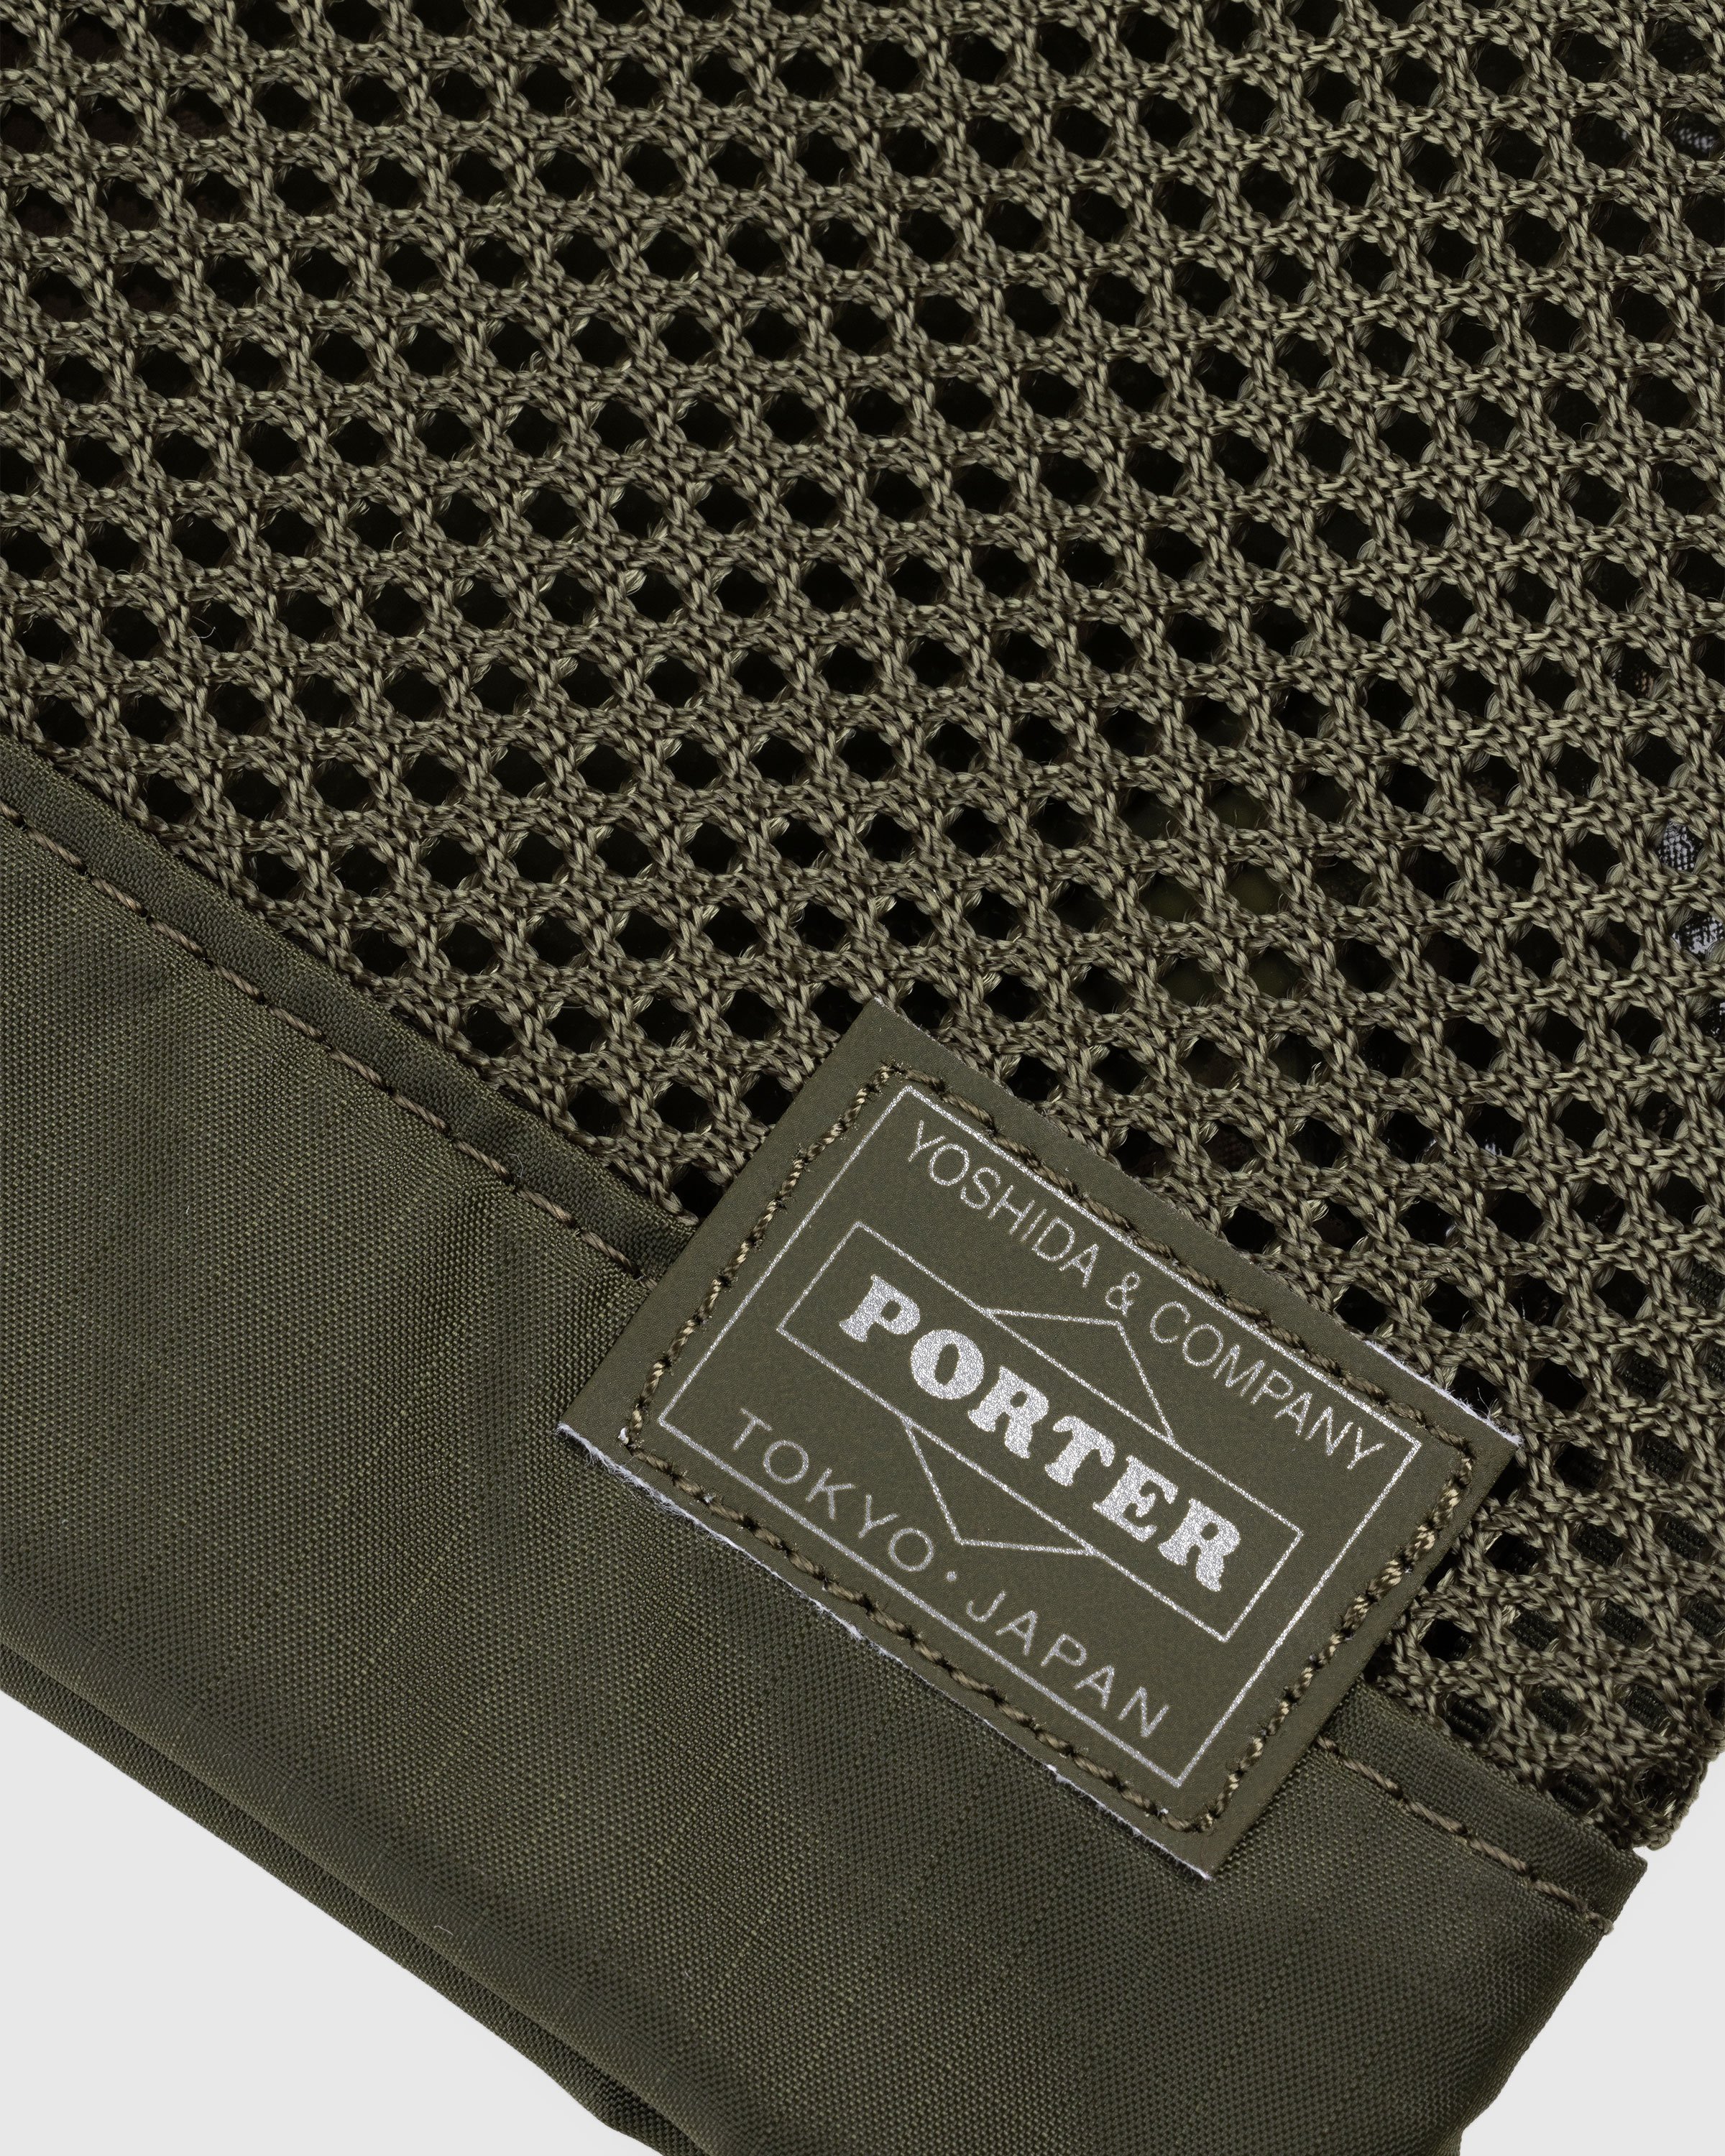 Porter-Yoshida & Co. - Sacoche Screen Shoulder Bag Green - Accessories - Green - Image 5